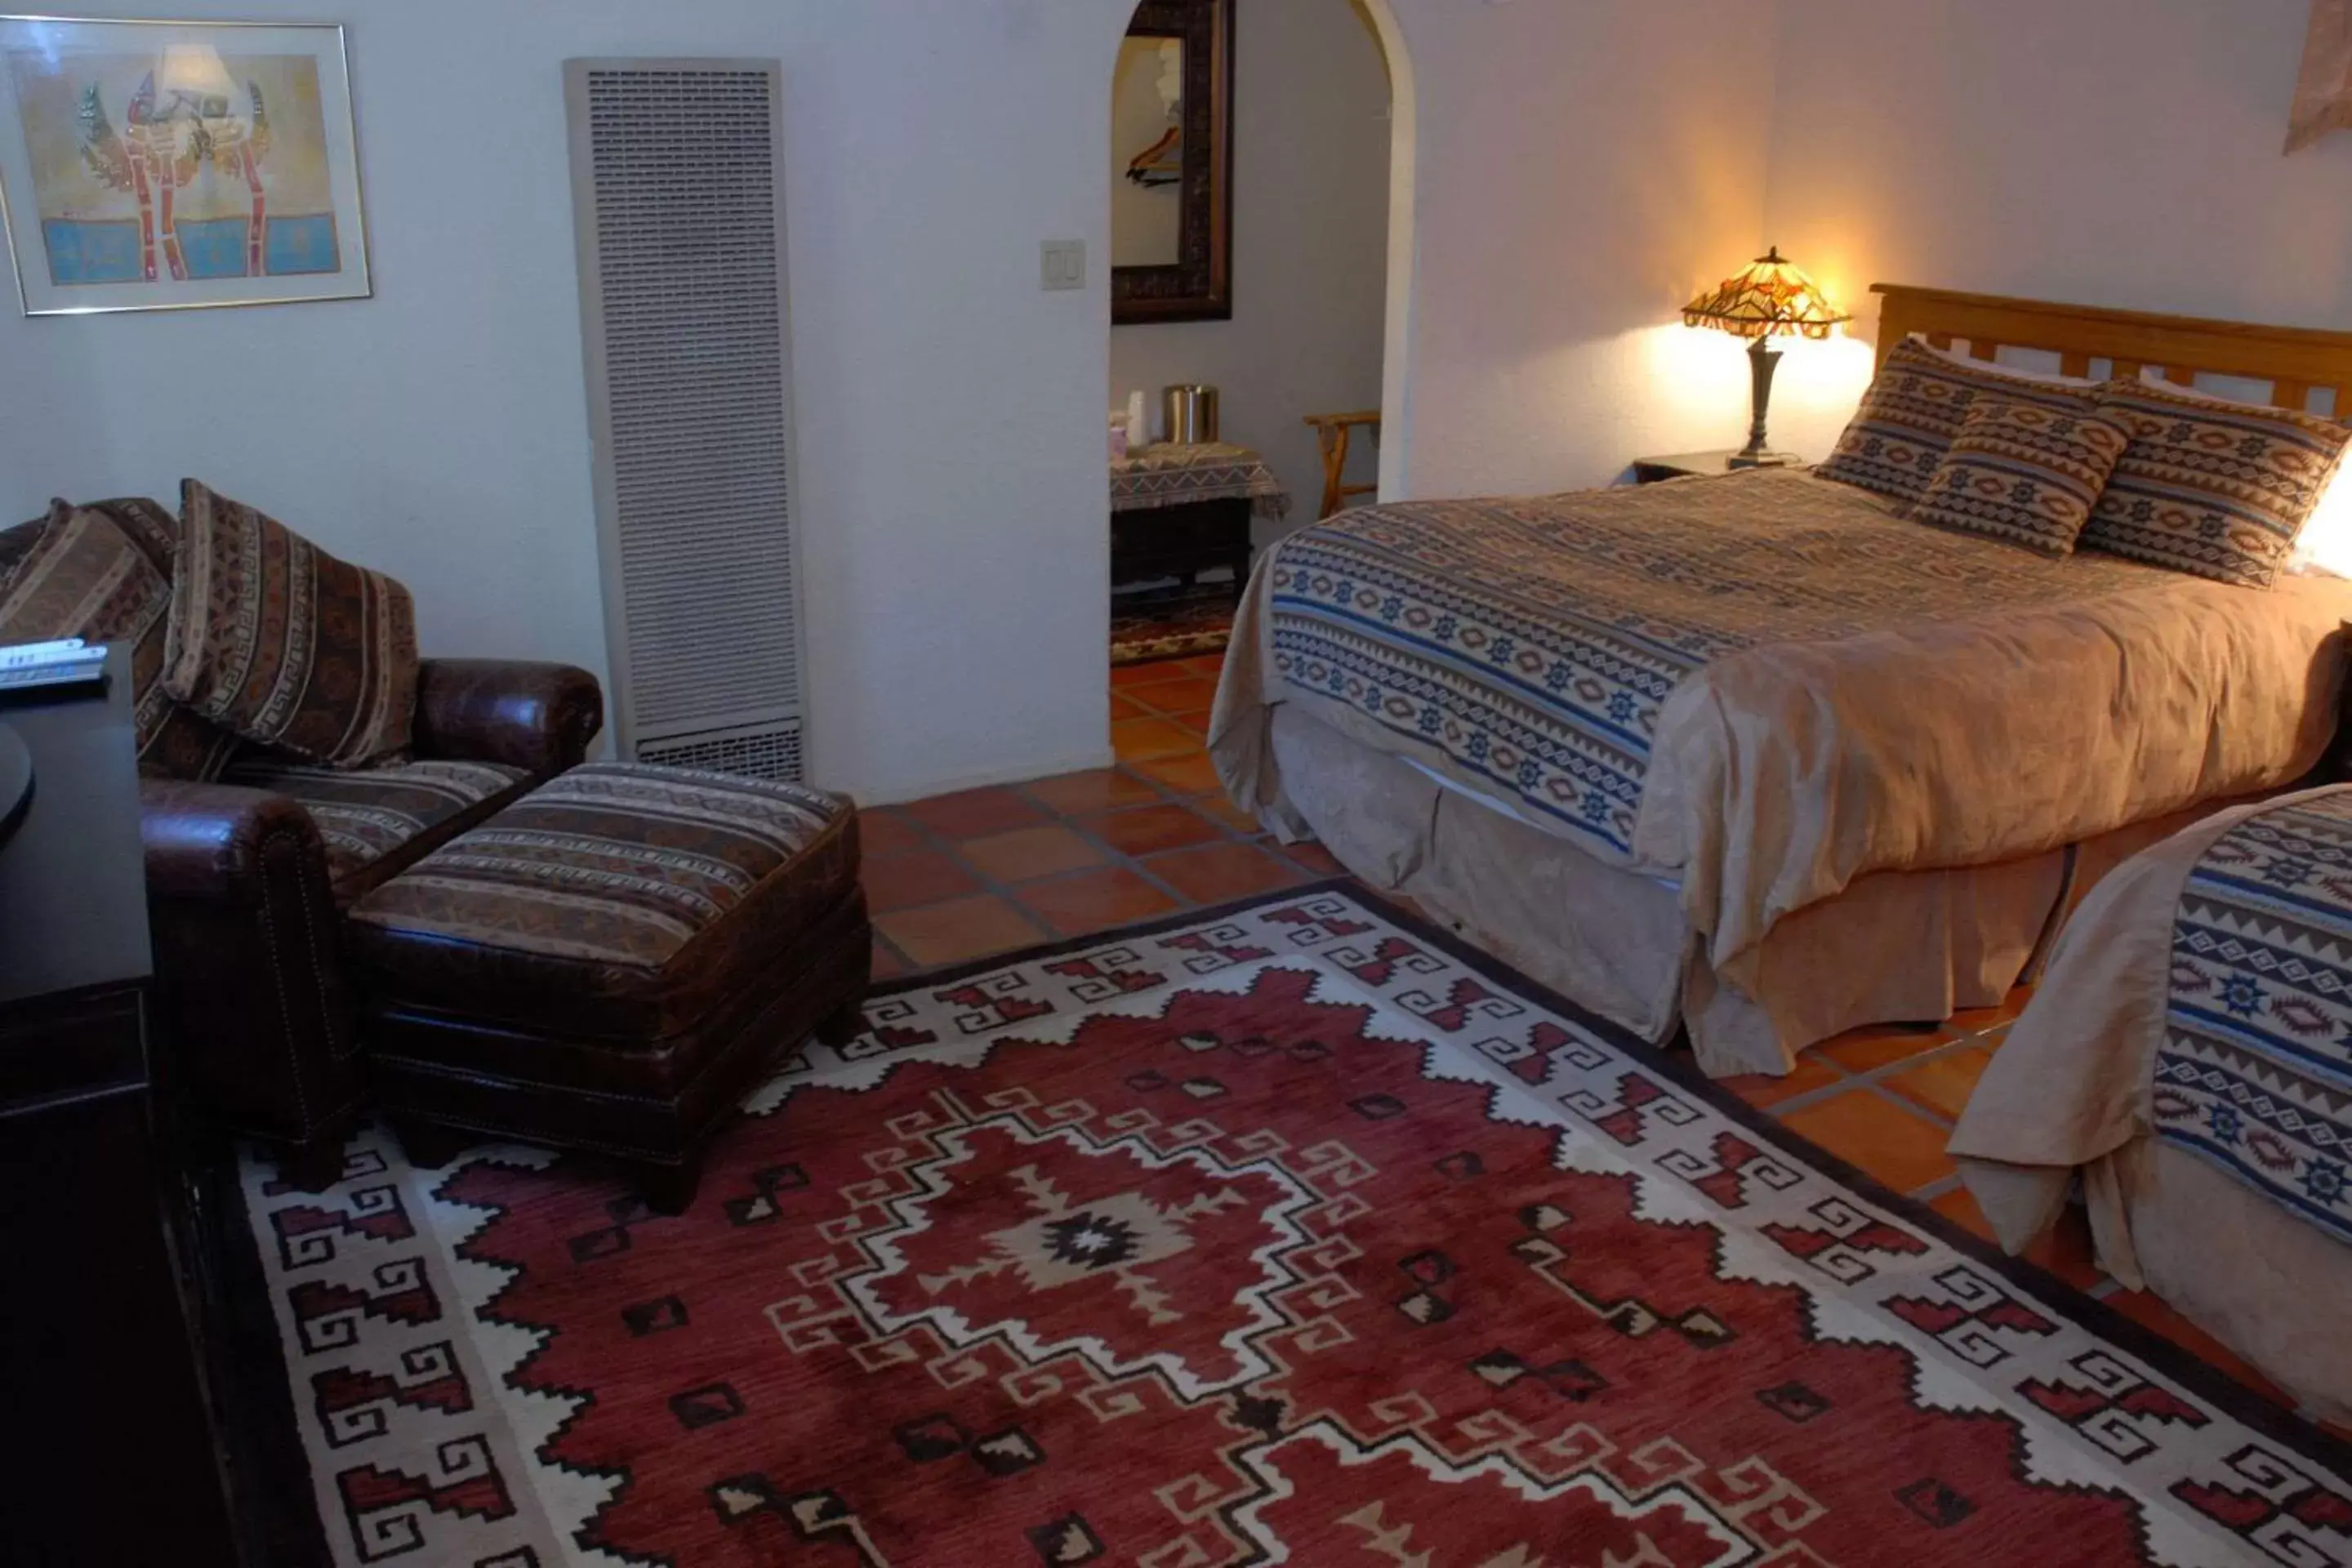 Bedroom, Bed in Casas de Suenos Old Town Historic Inn, Ascend Hotel Collection